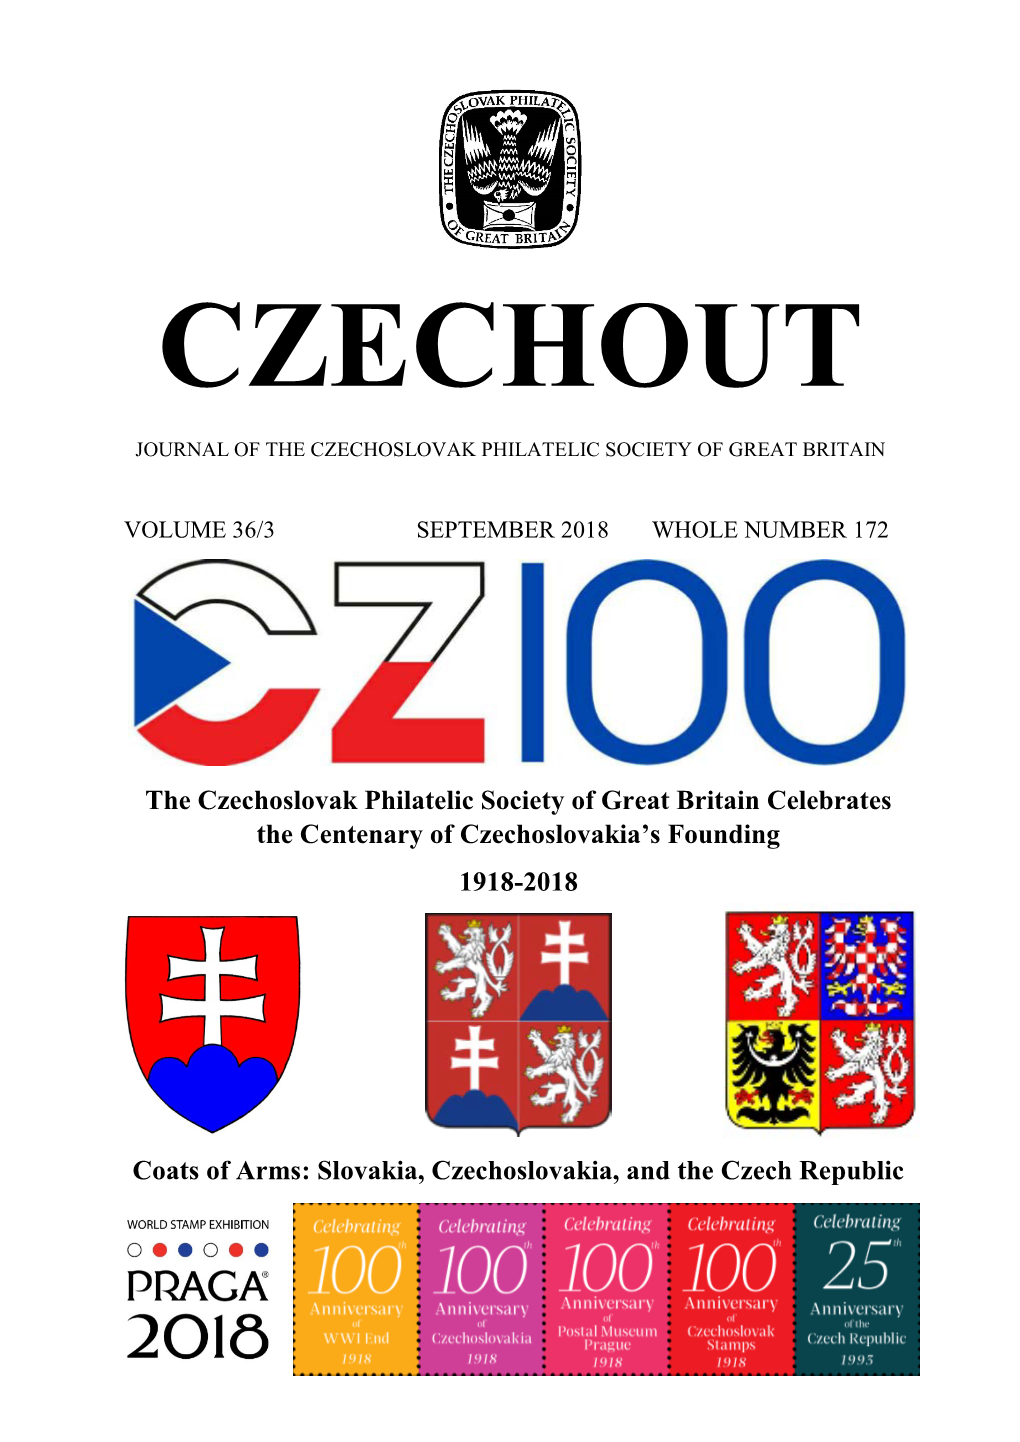 The Czechoslovak Philatelic Society of Great Britain Celebrates the Centenary of Czechoslovakia’S Founding 1918-2018